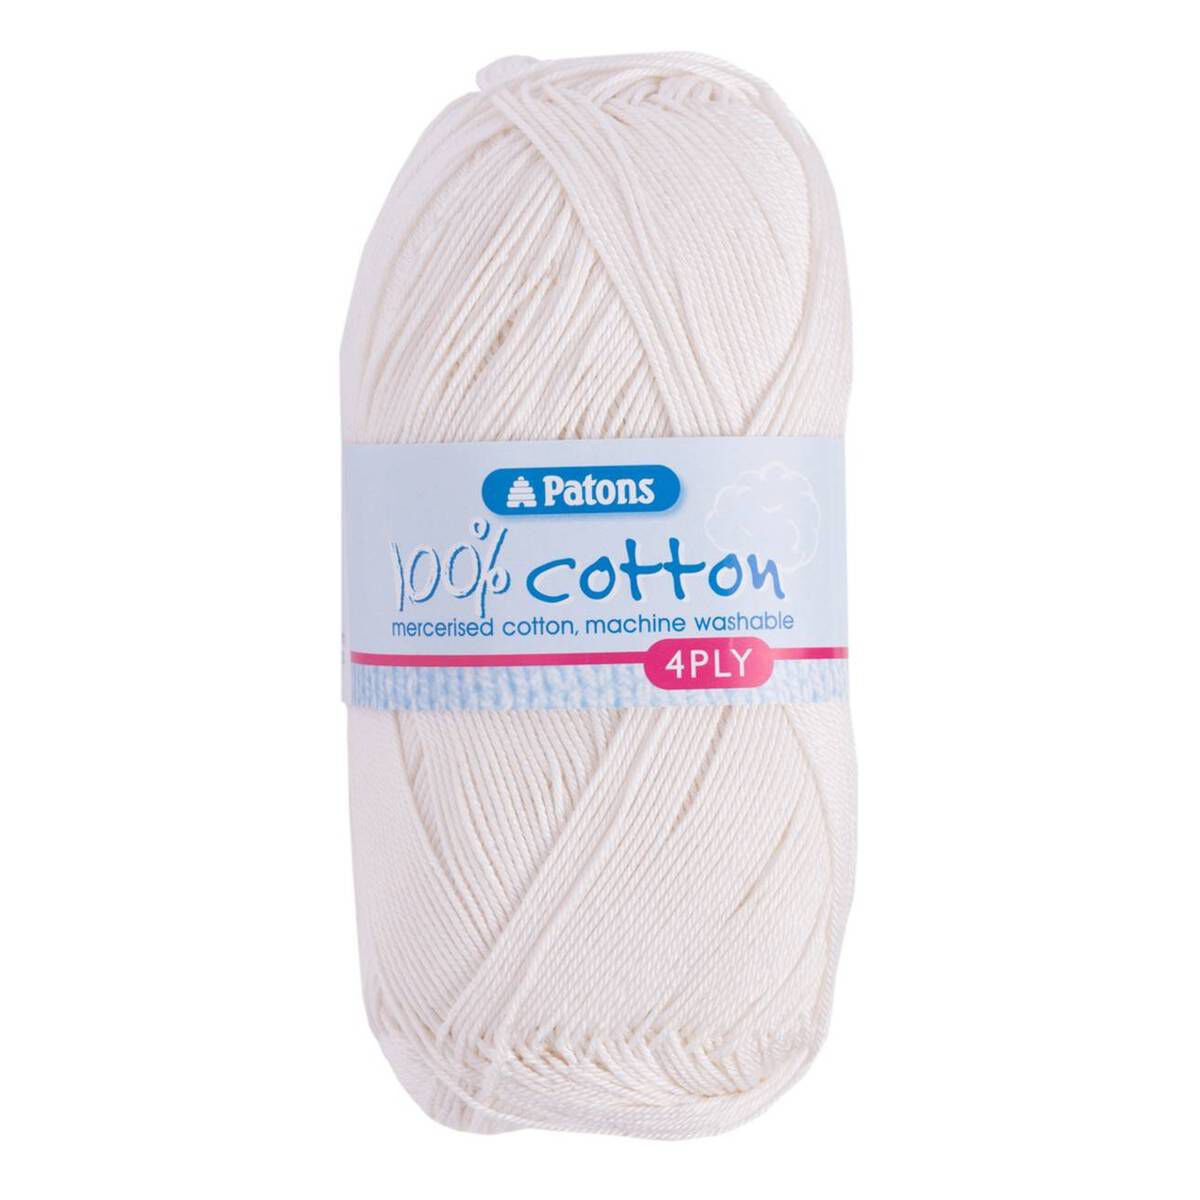 Patons Cream 100% Cotton 4 Ply Yarn 100g | Hobbycraft